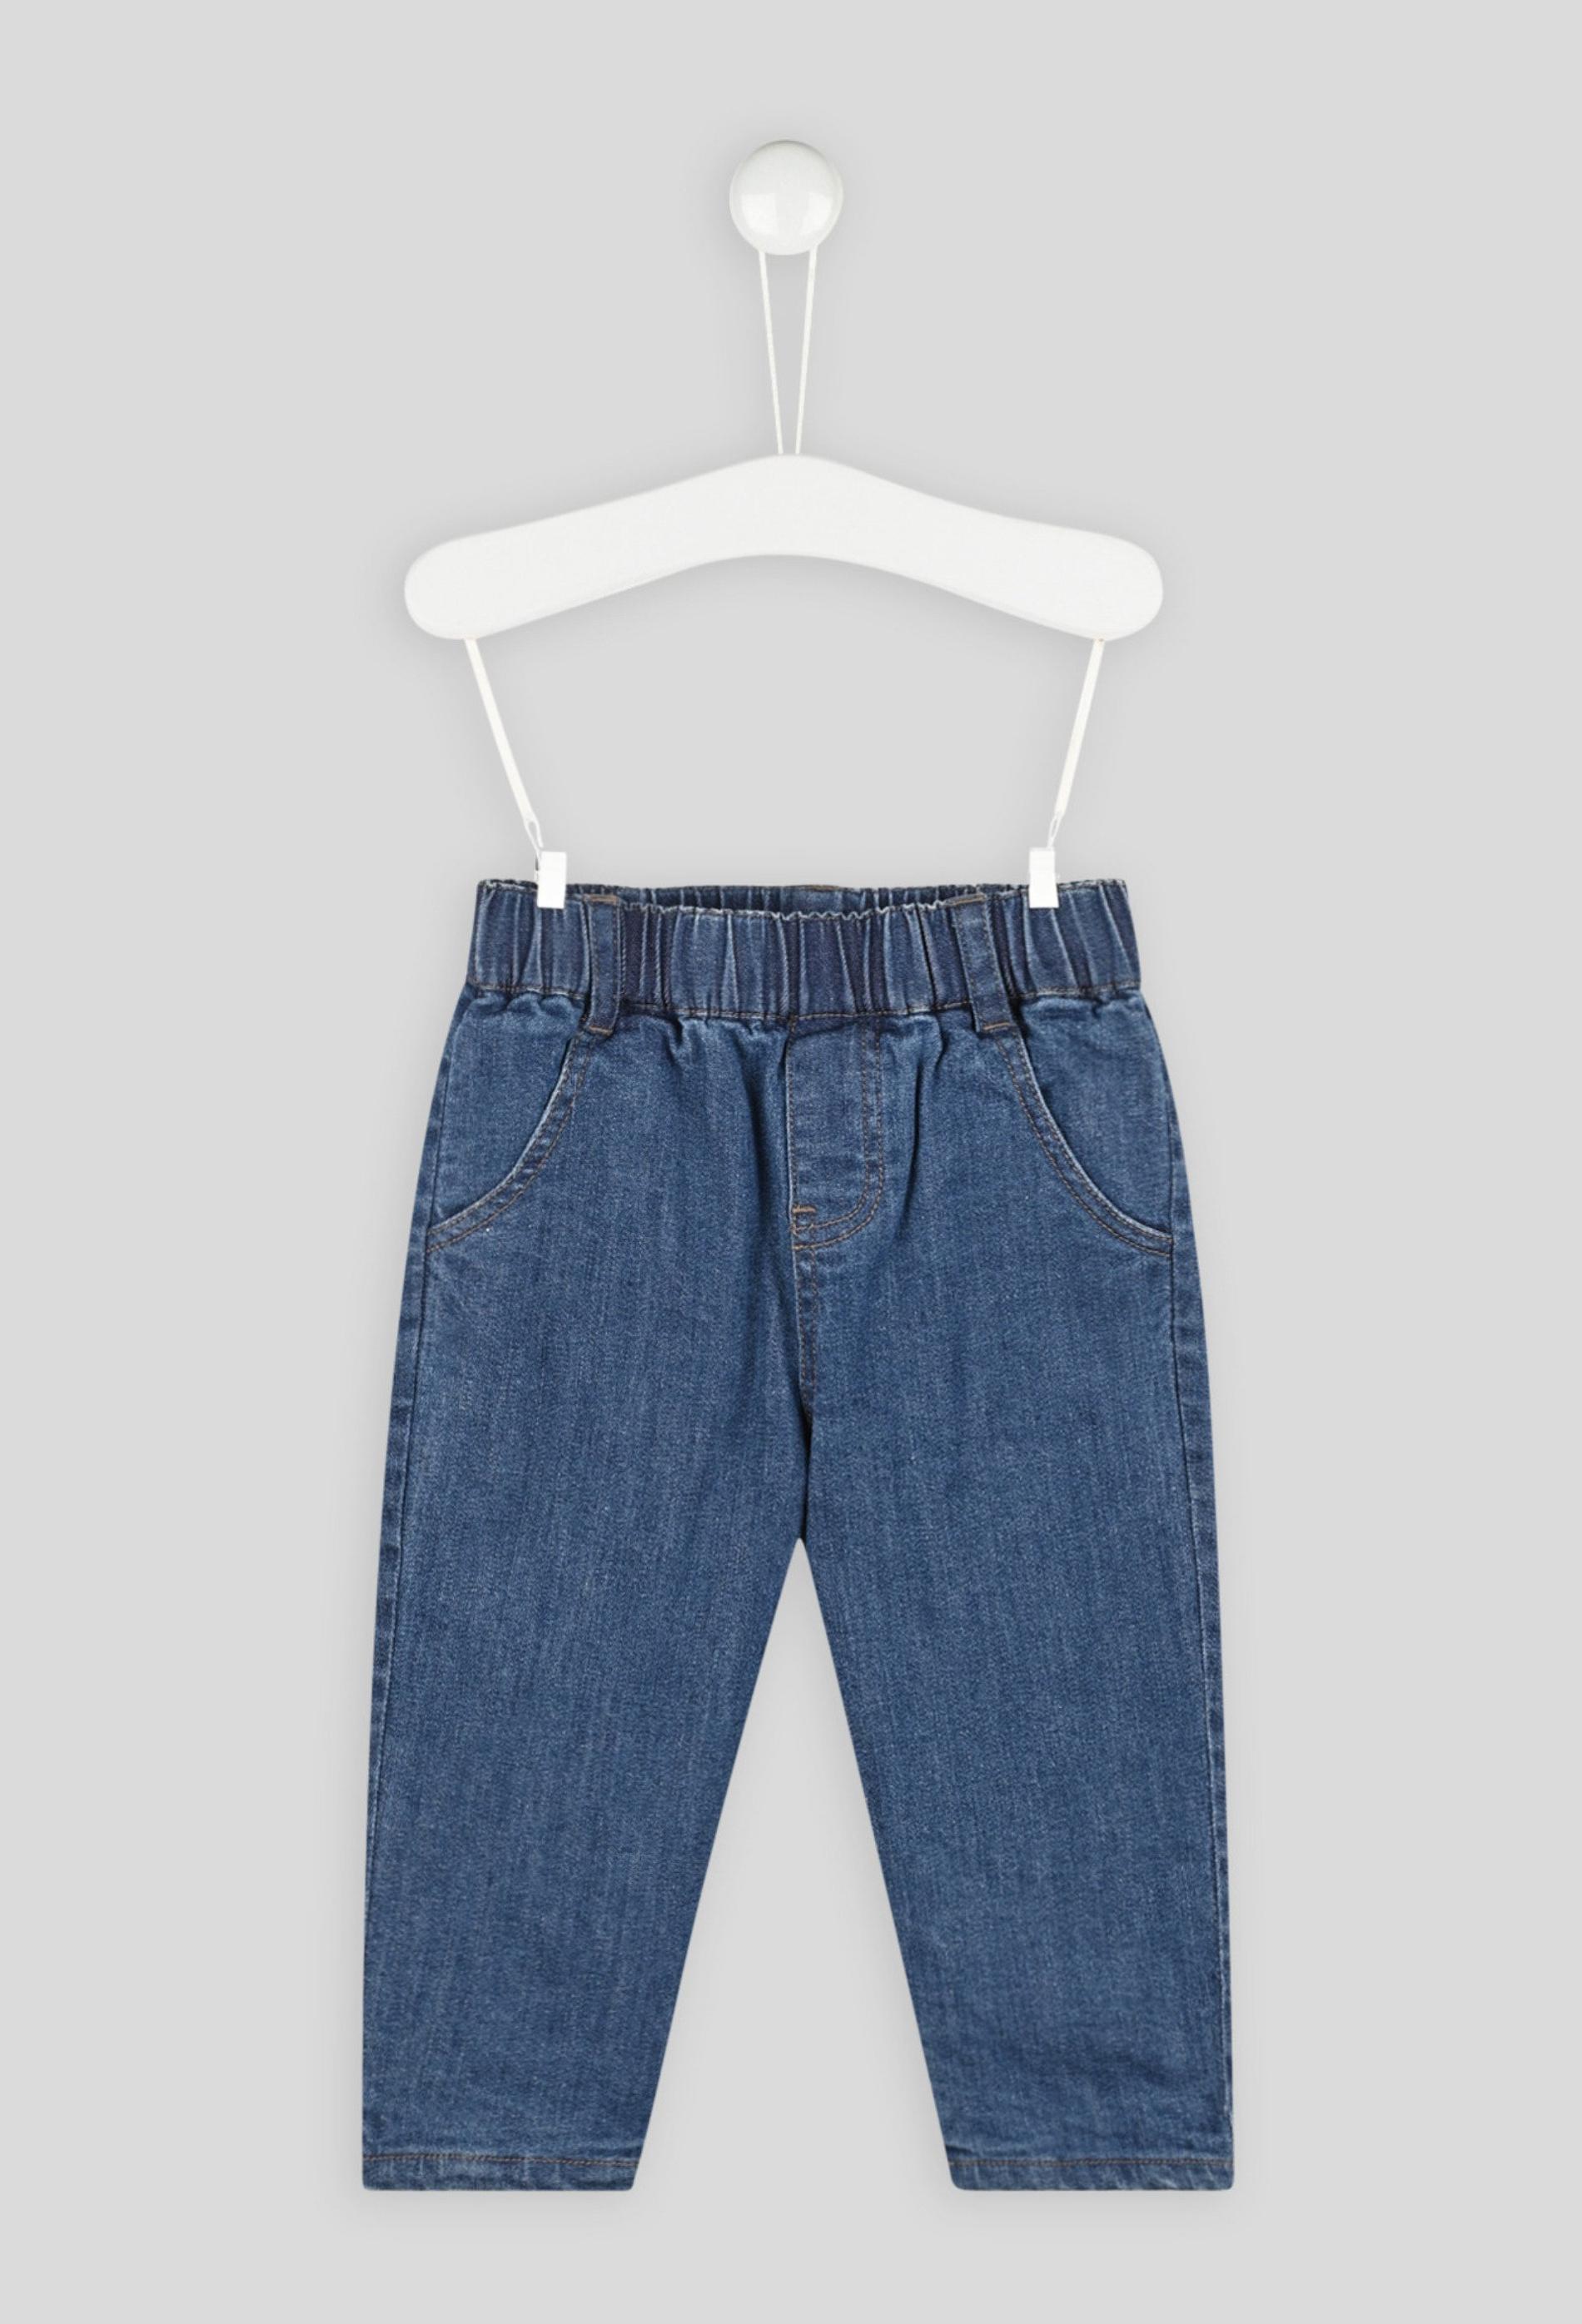 Pantalon uni taille élastique en denim, mixte, OEKO-TEX 6 mois bleu